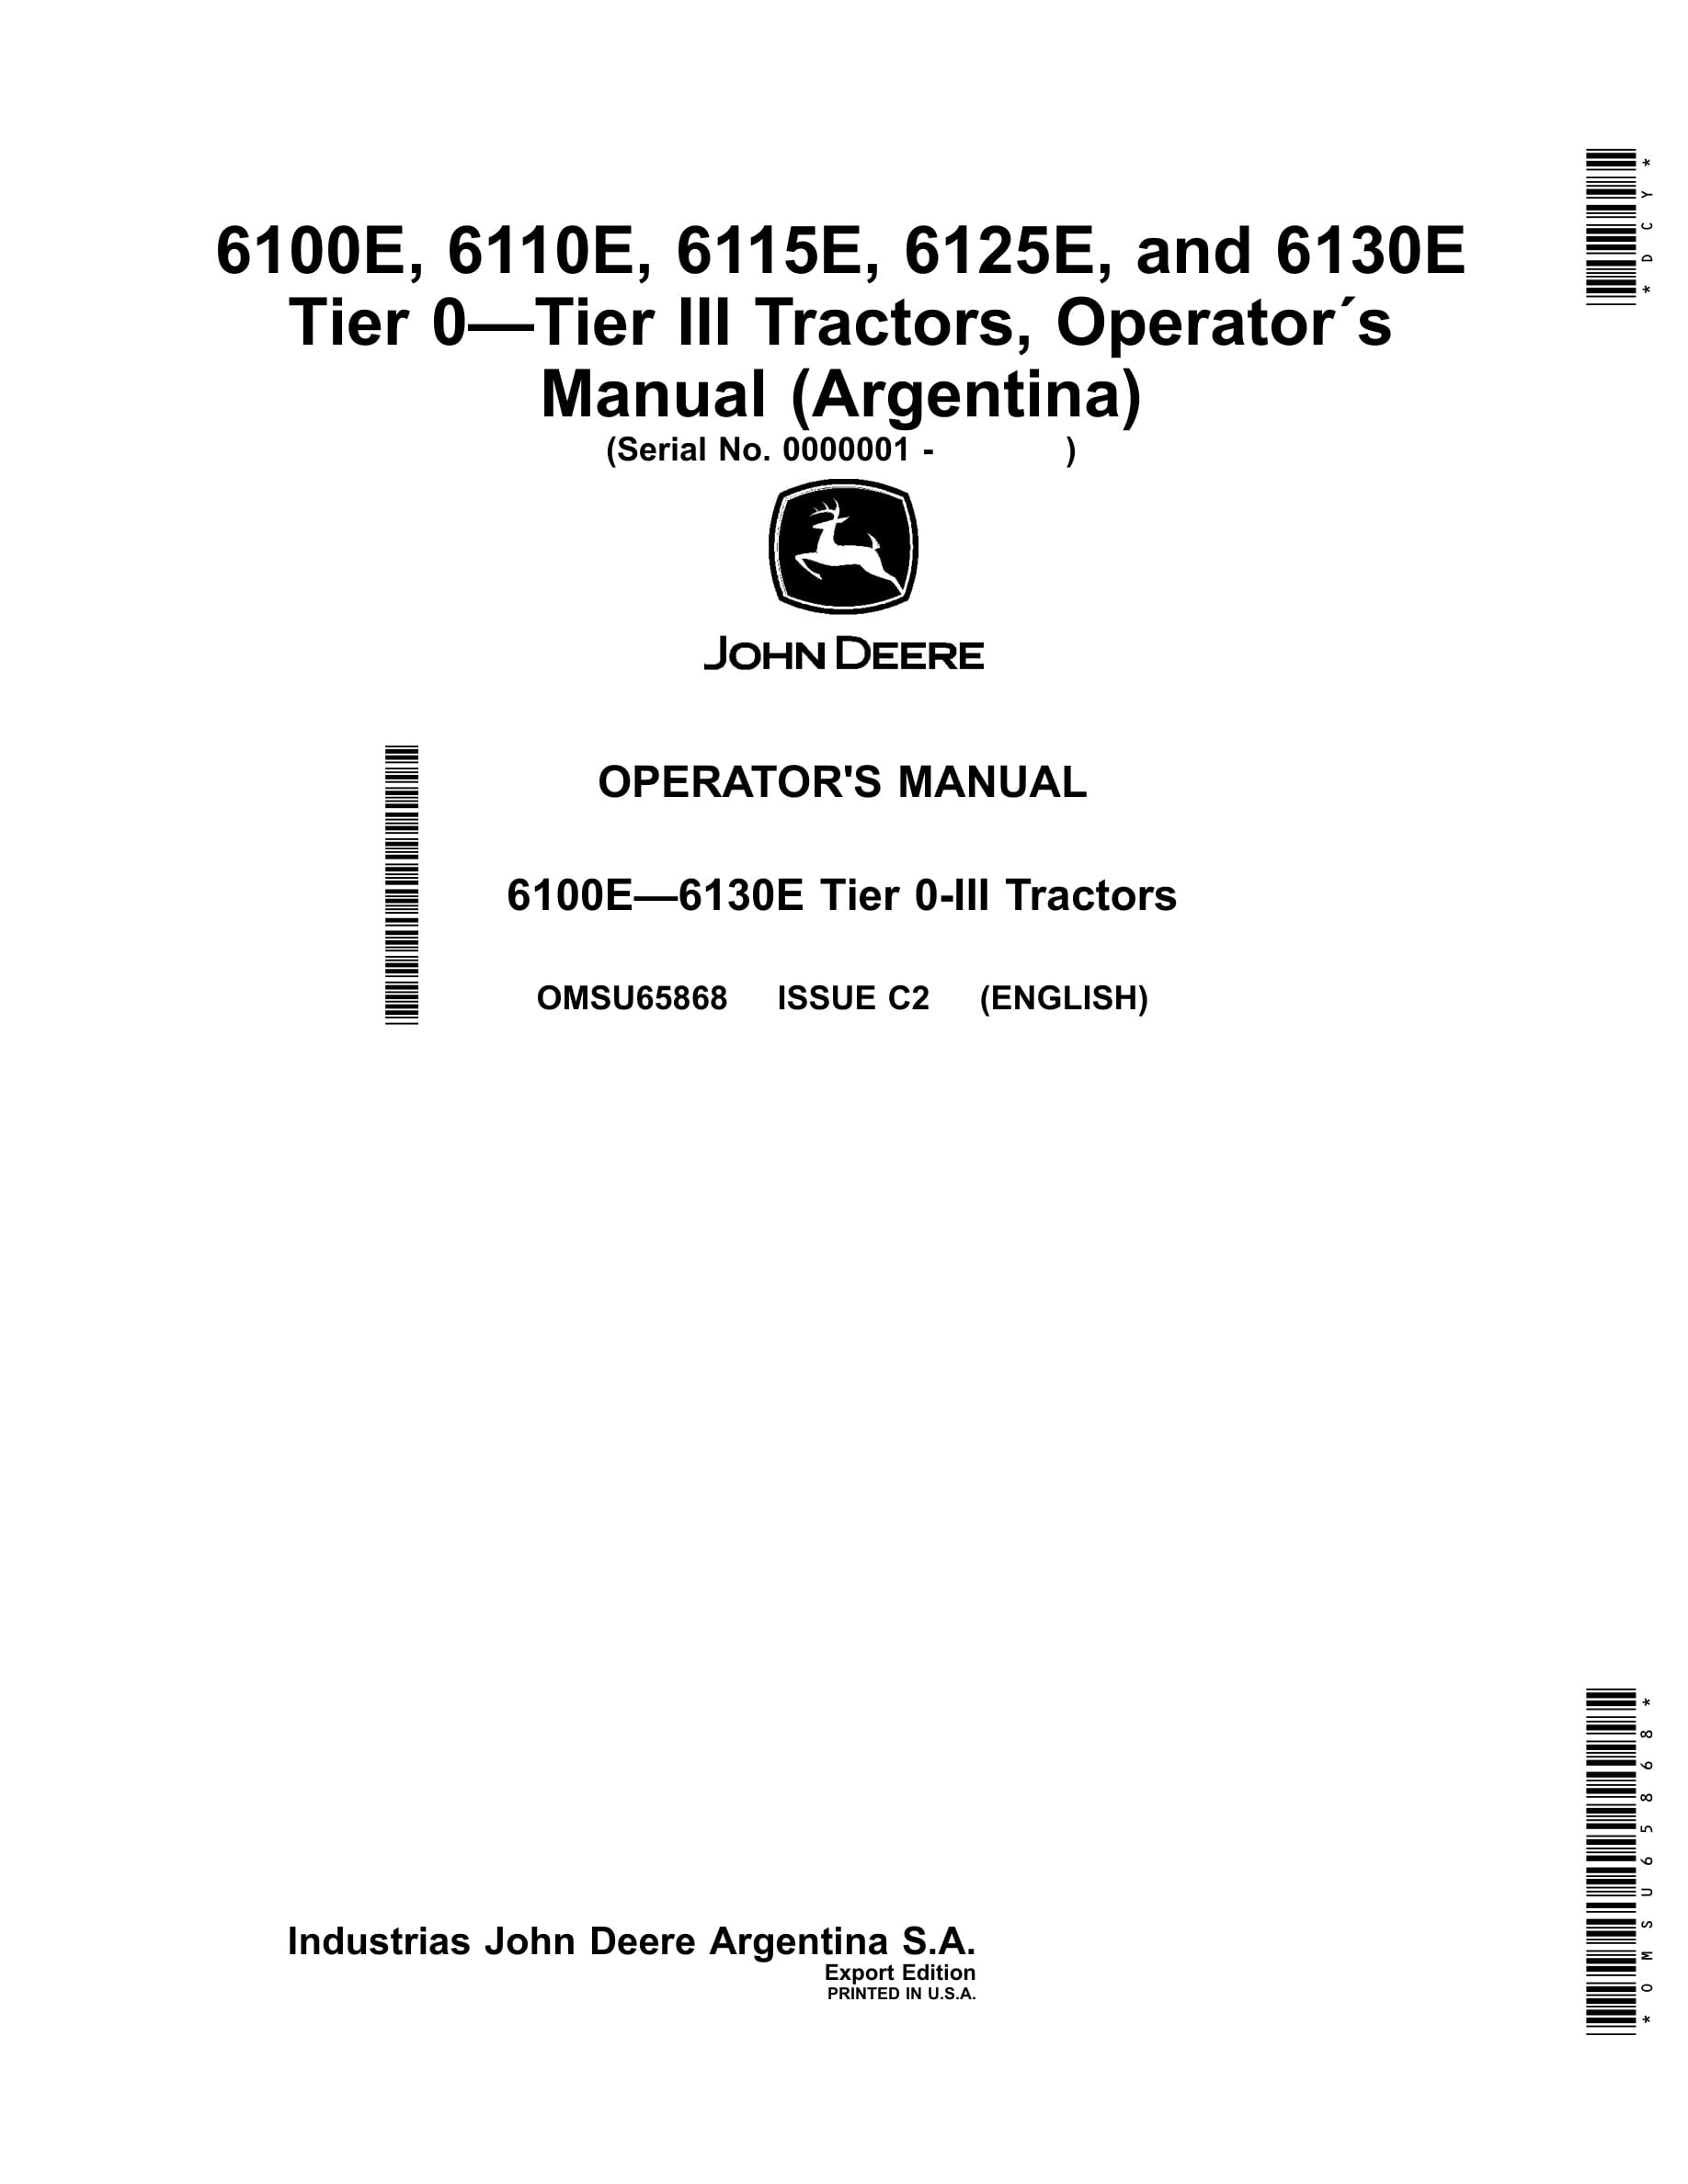 John Deere 6100e, 6110e, 6115e, 6125e, And 6130e Tier 0-tier Iii Tractors Operator Manuals OMSU65868-1